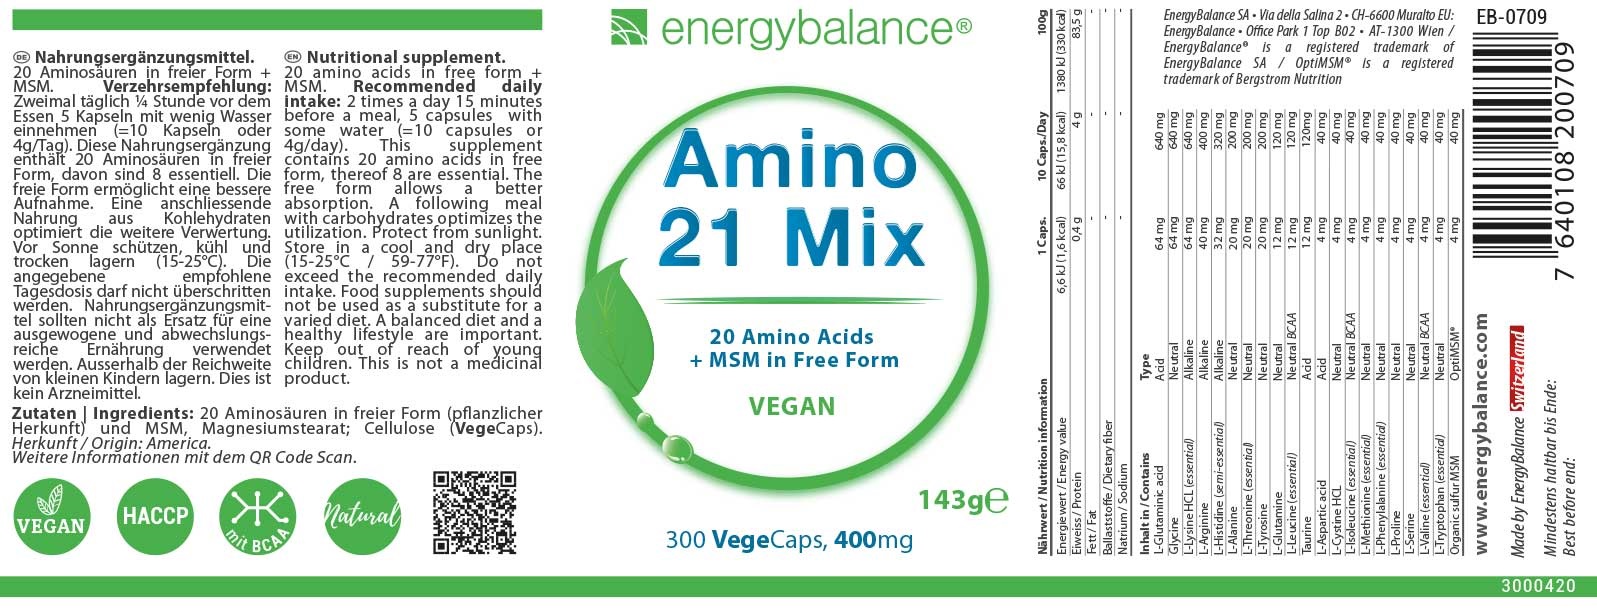 Amino 21 Mix Etikett von Energybalance